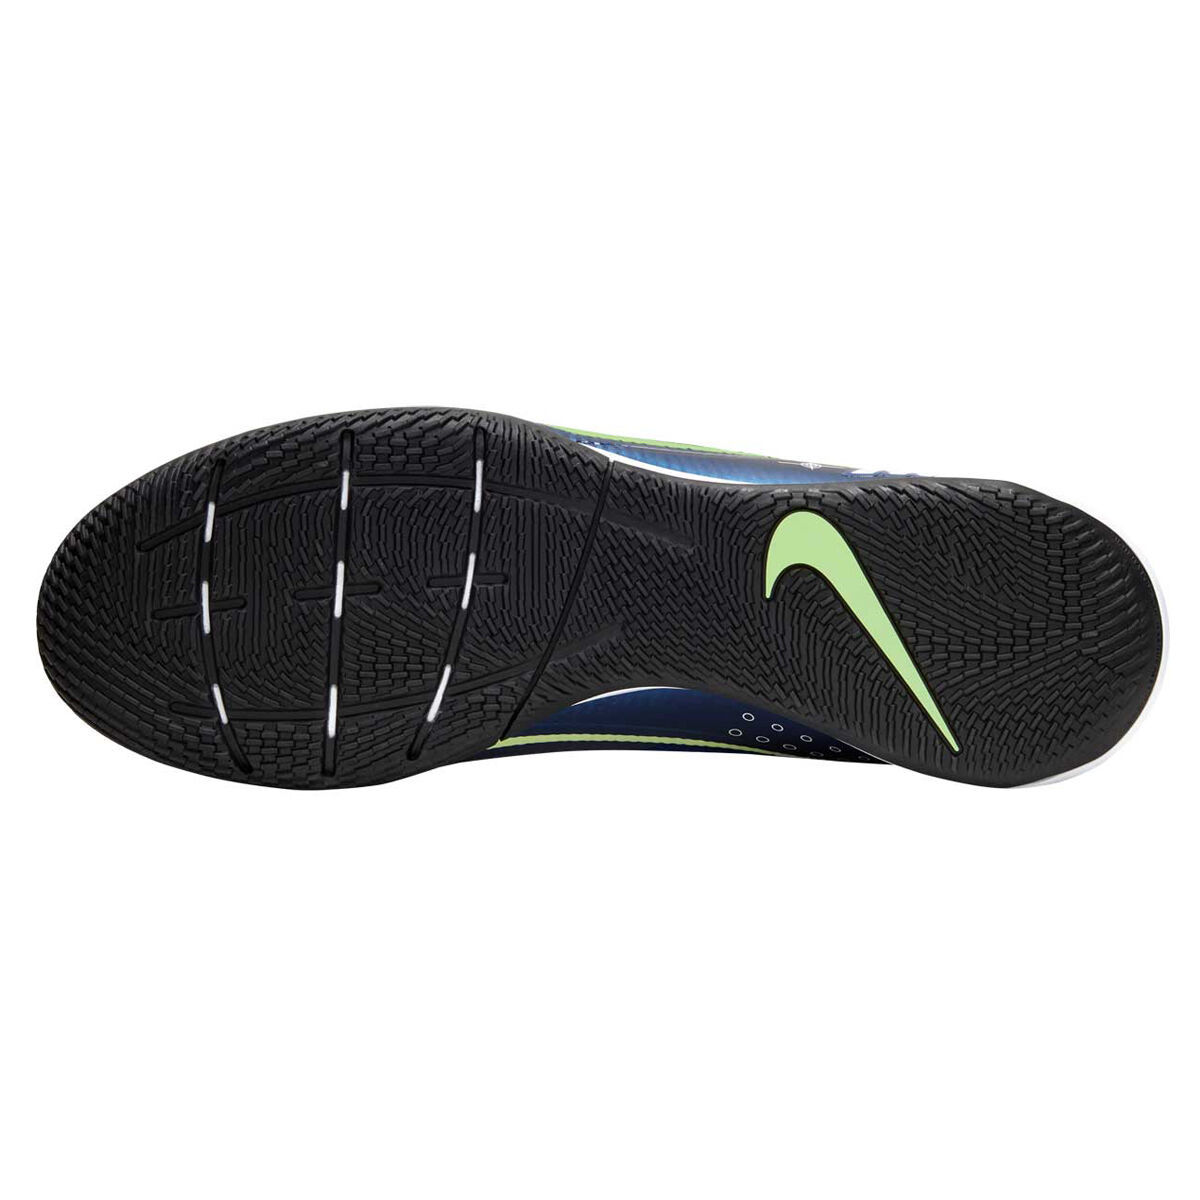 Nike Men 's Mercurial Superfly 6 Elite FG Cleats .Amazon.com